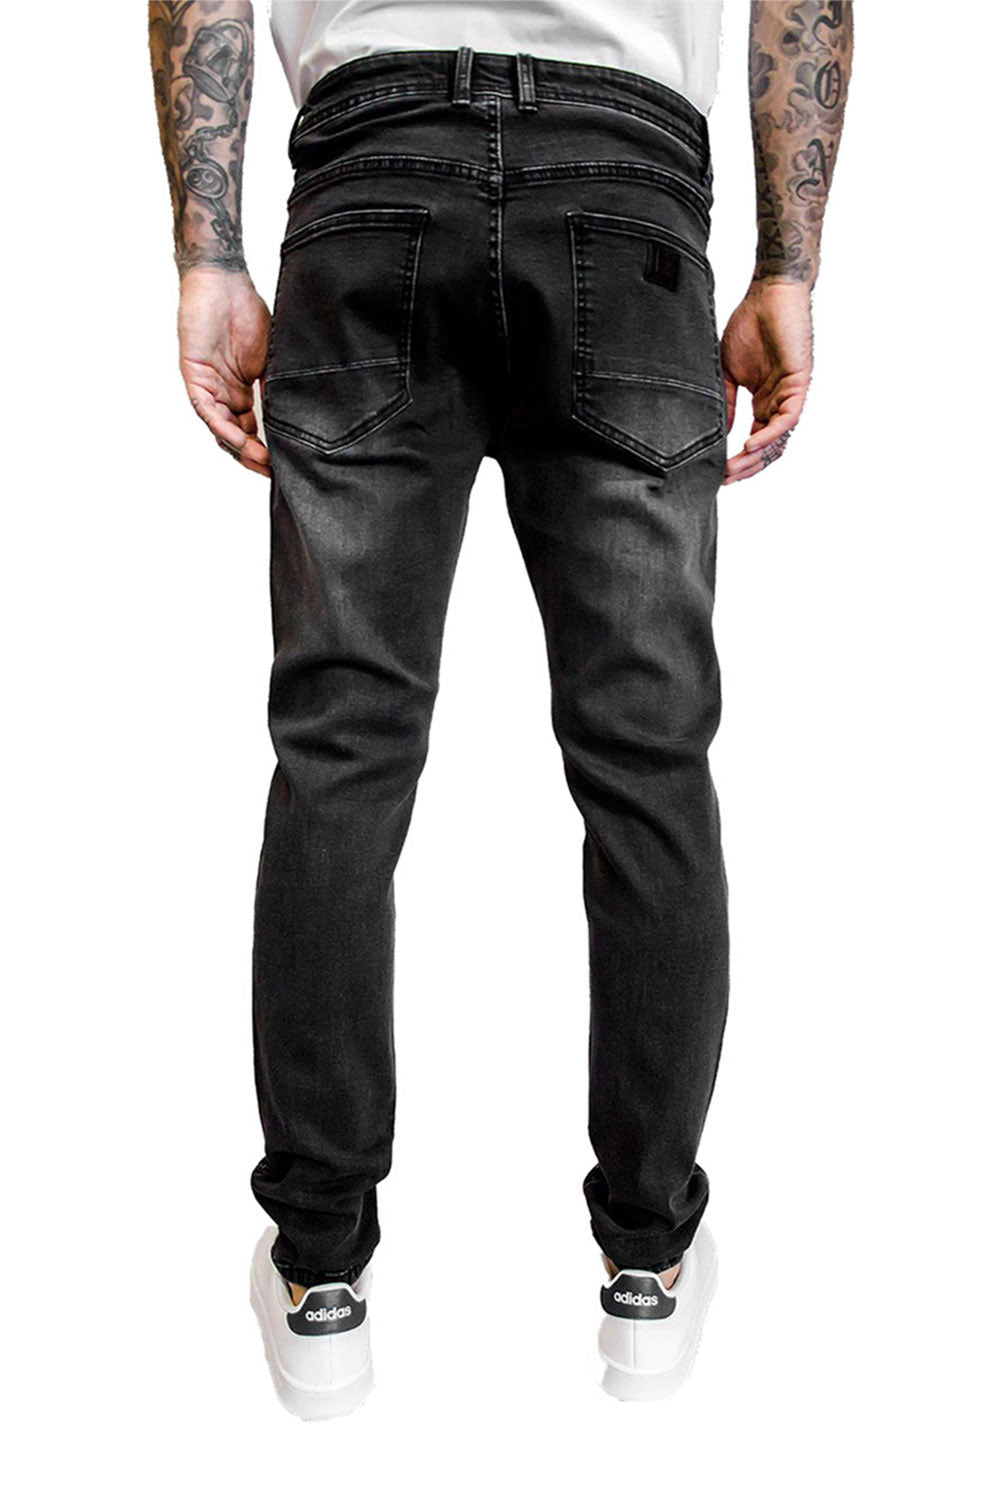 Barabas Men's Bleach Rhinestone Straight fit Denim Jeans SN8885 Black